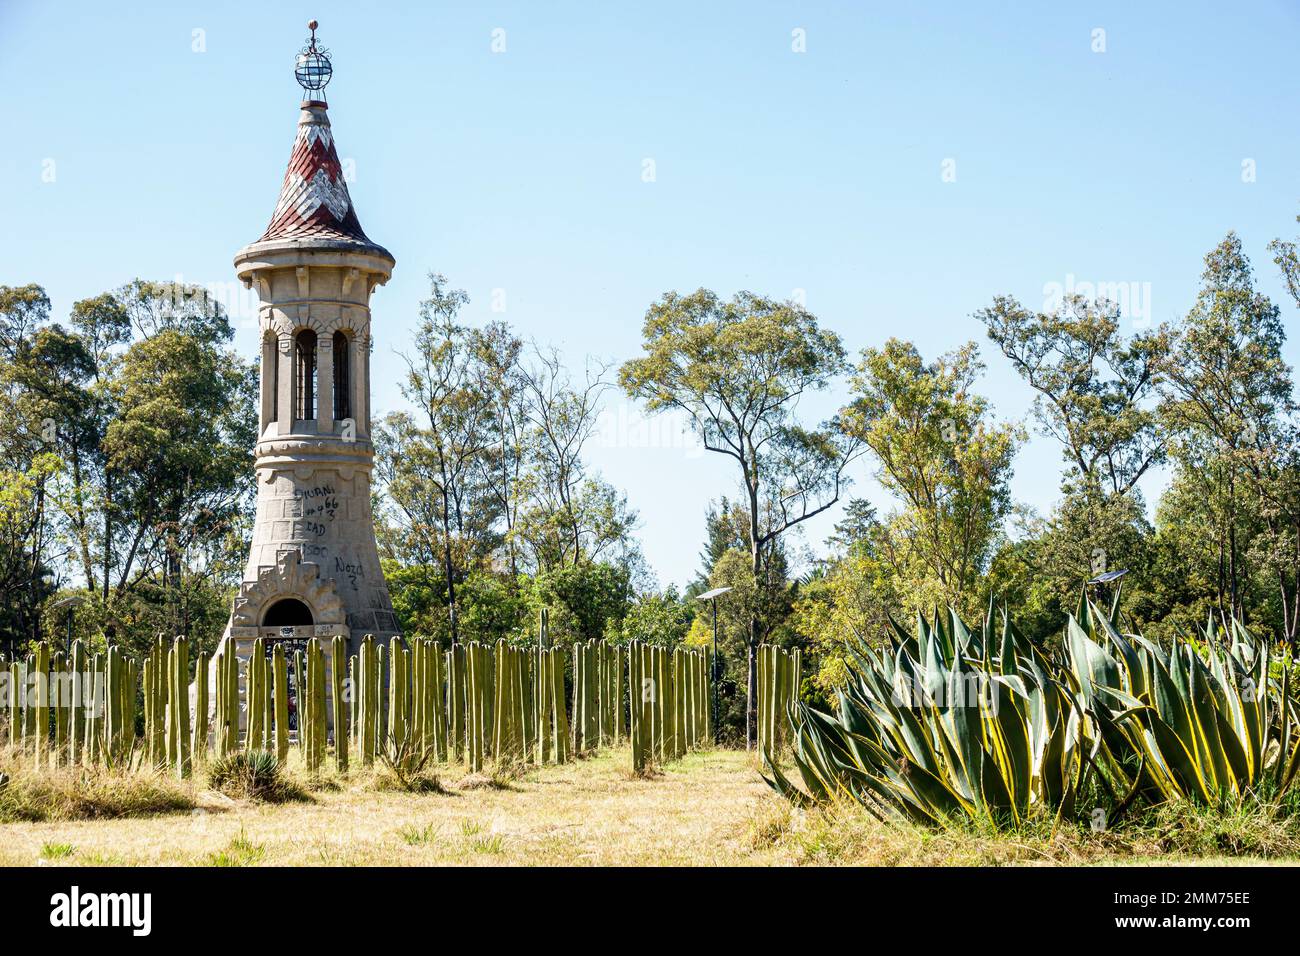 Mexico City,Bosque de Chapultepec Section 2 Forest,Museo Jardin del Agua Garden of Water Museum ventilation tower,cactus cacti Stock Photo